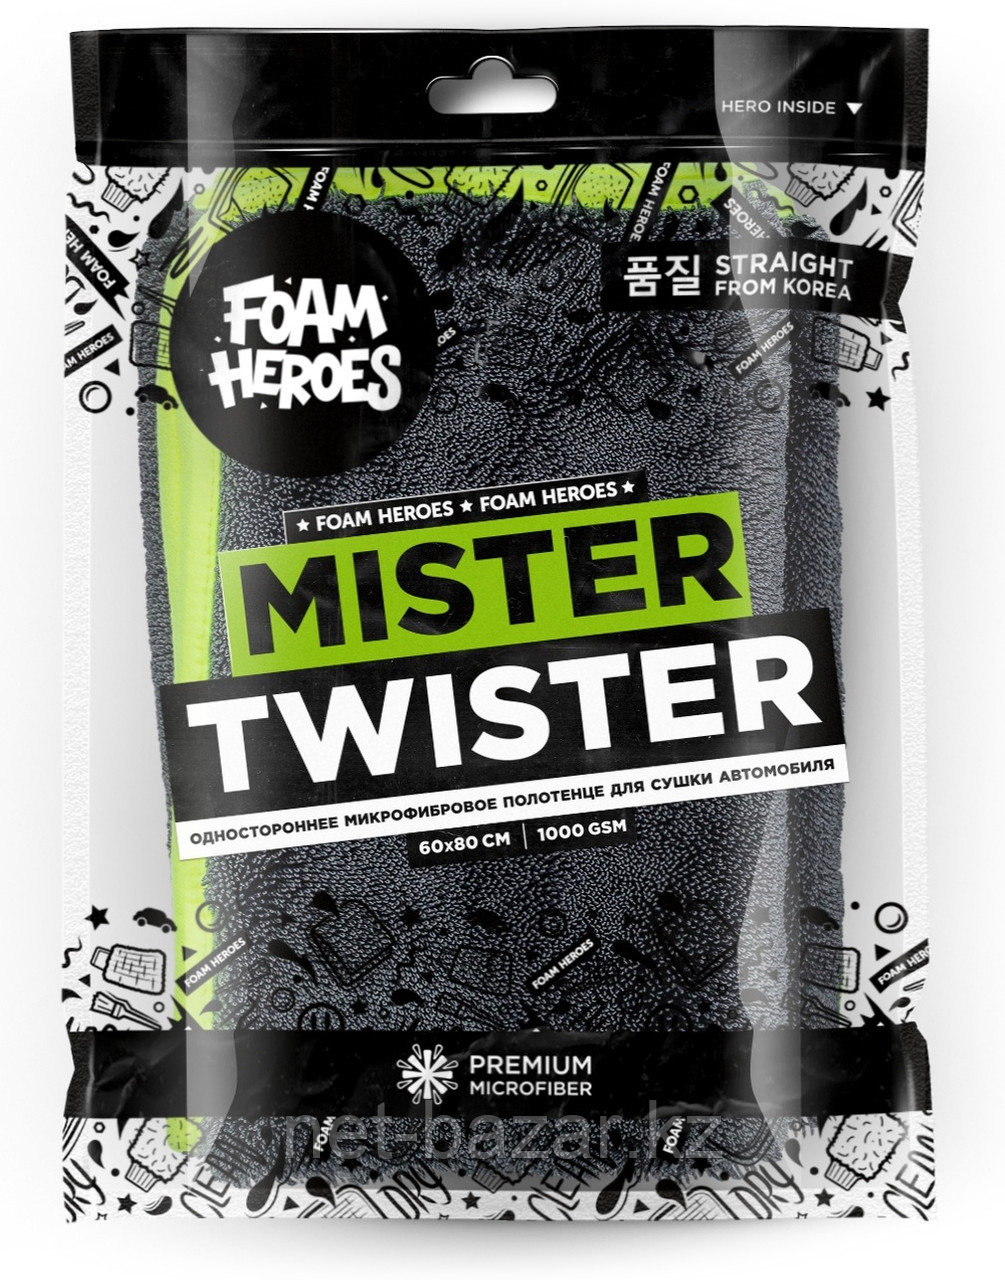 Foam Heroes Mr/ Twister одностороннее микрофибровое  полотенце для сушки автомобиля 60*80см, 1000 г